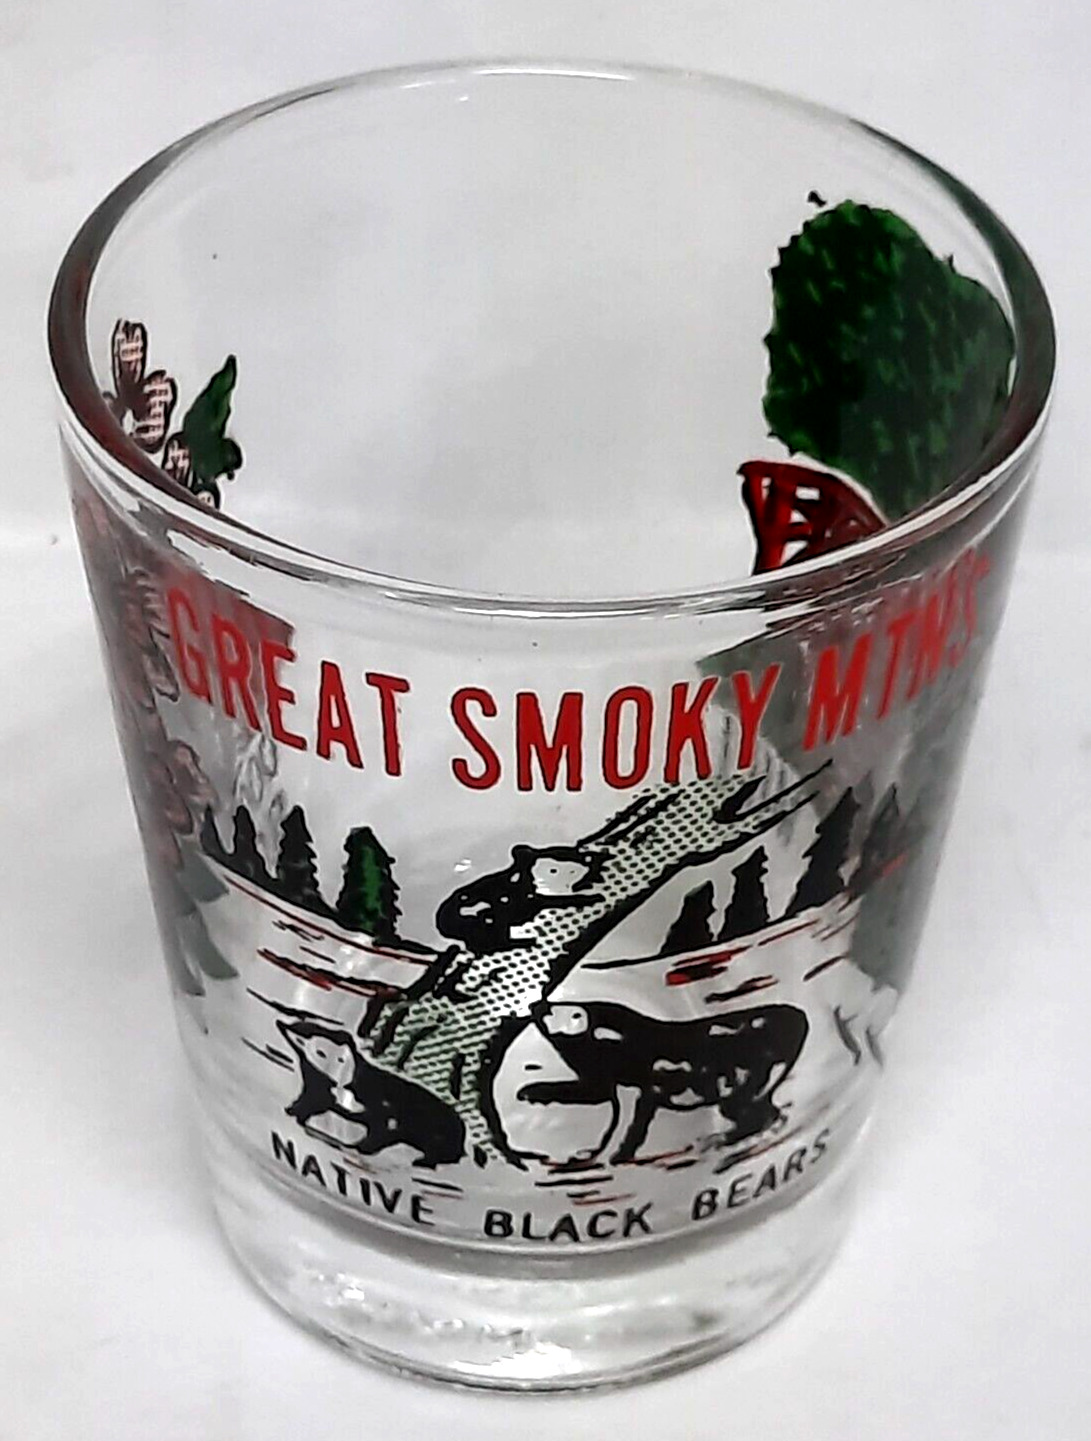 Vintage glass shot glass GREAT SMOKY MOUNTAINS